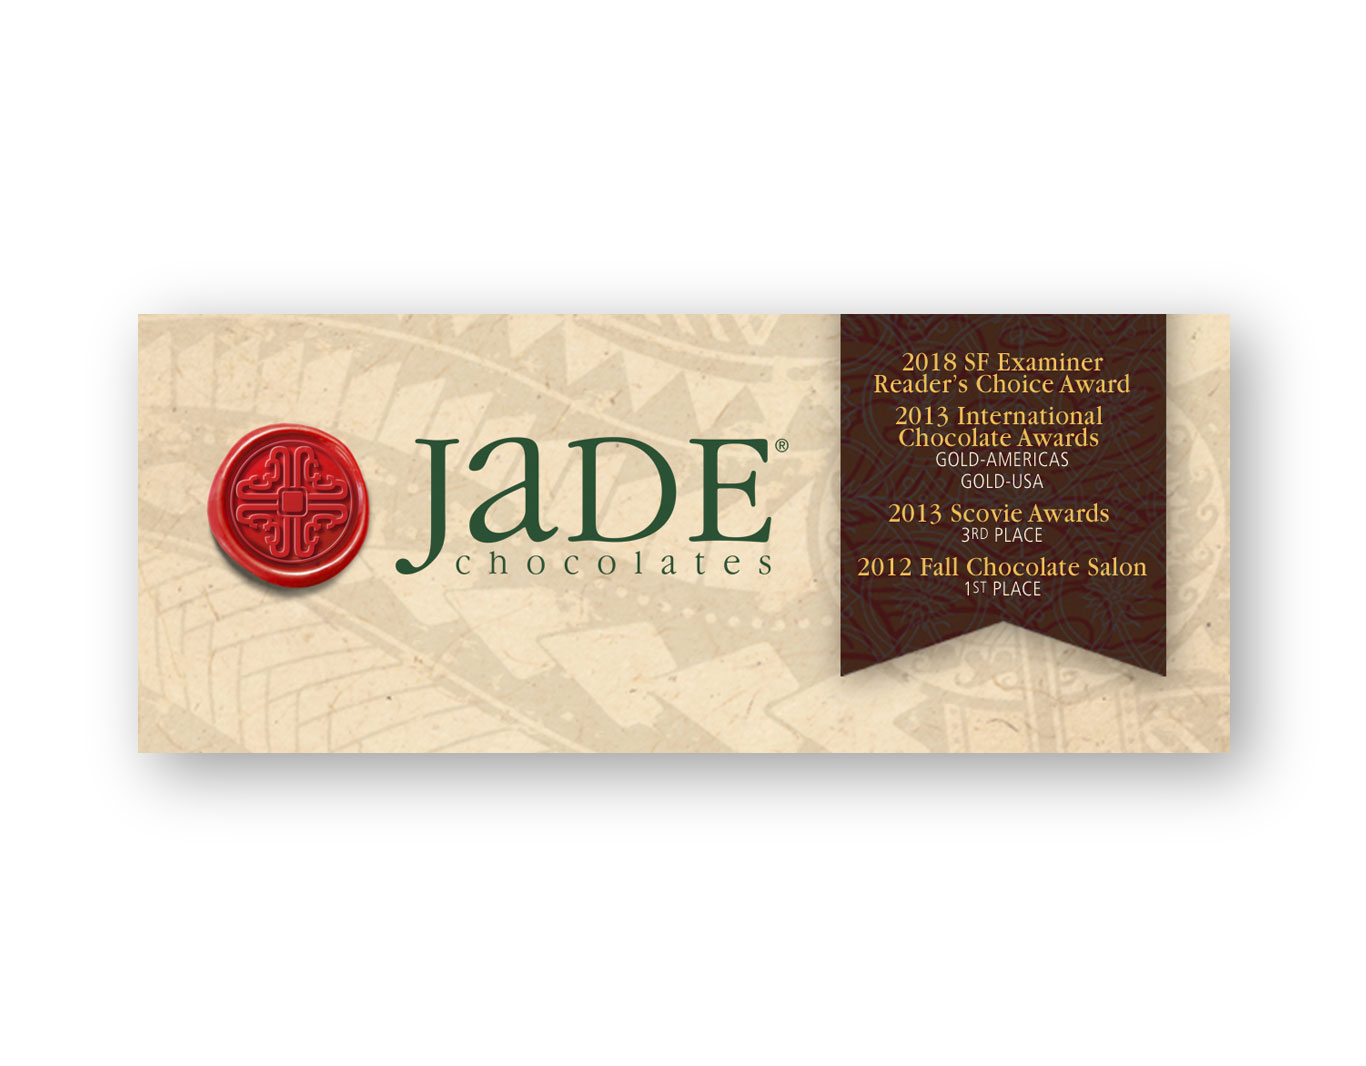 Digital Promotion- Jade Chocolates